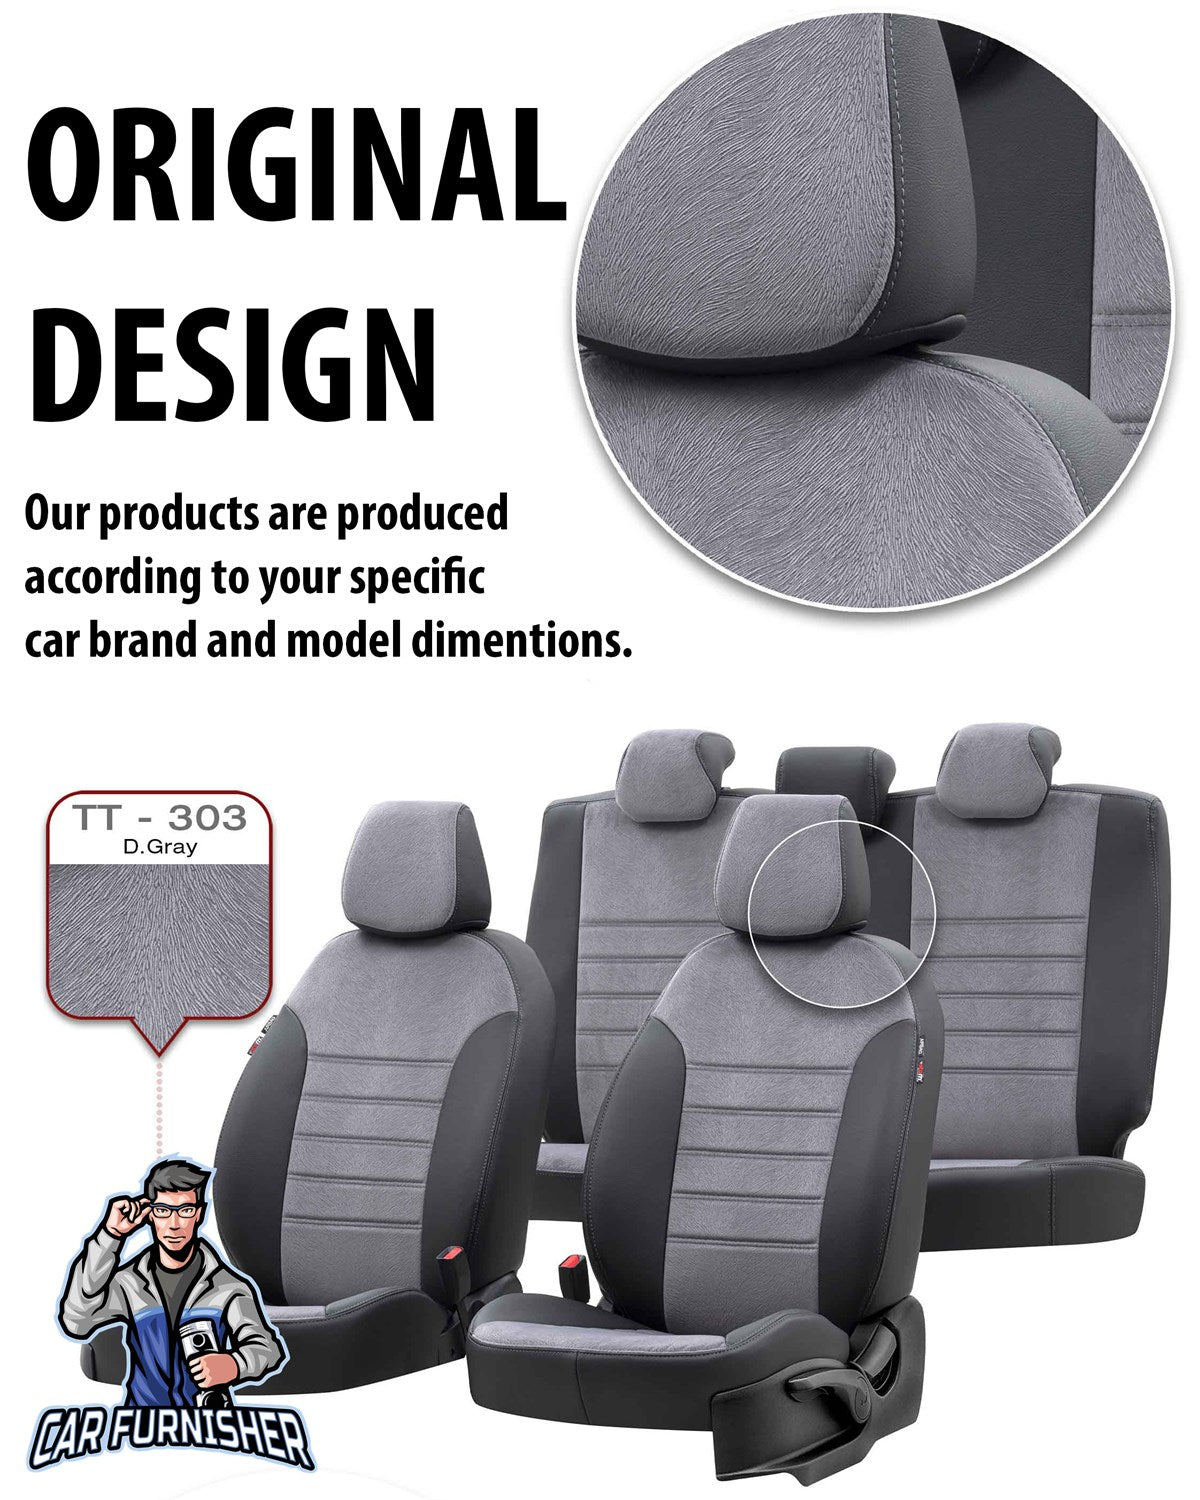 Suzuki Jimny Seat Covers London Foal Feather Design Beige Leather & Foal Feather